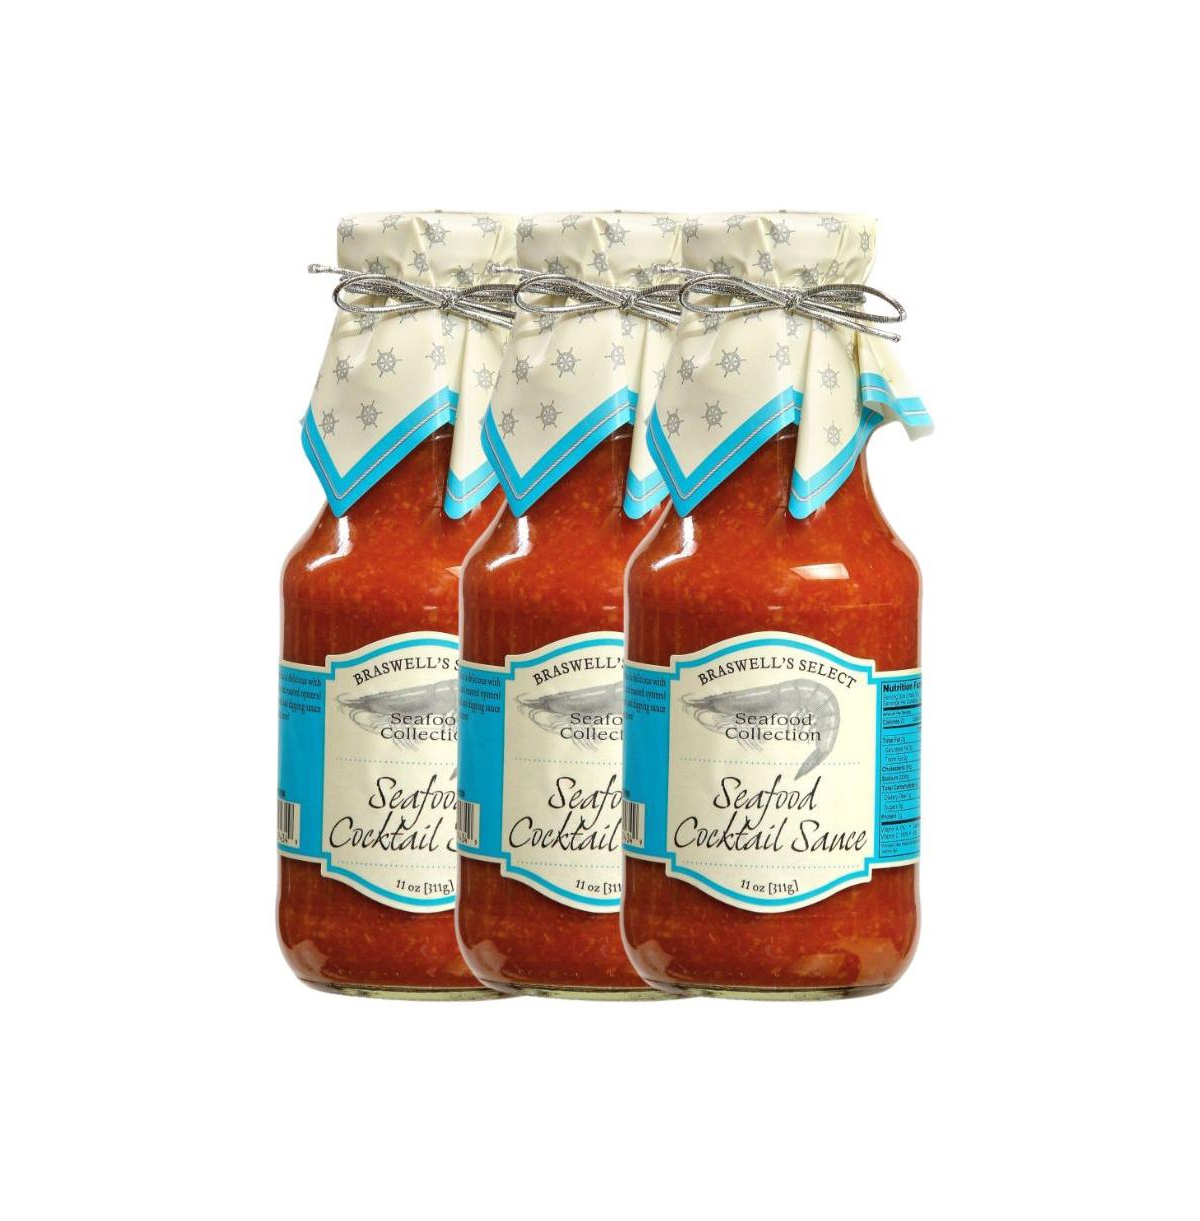 Braswells Seafood Cocktail Sauce 11 oz (3 Pack)